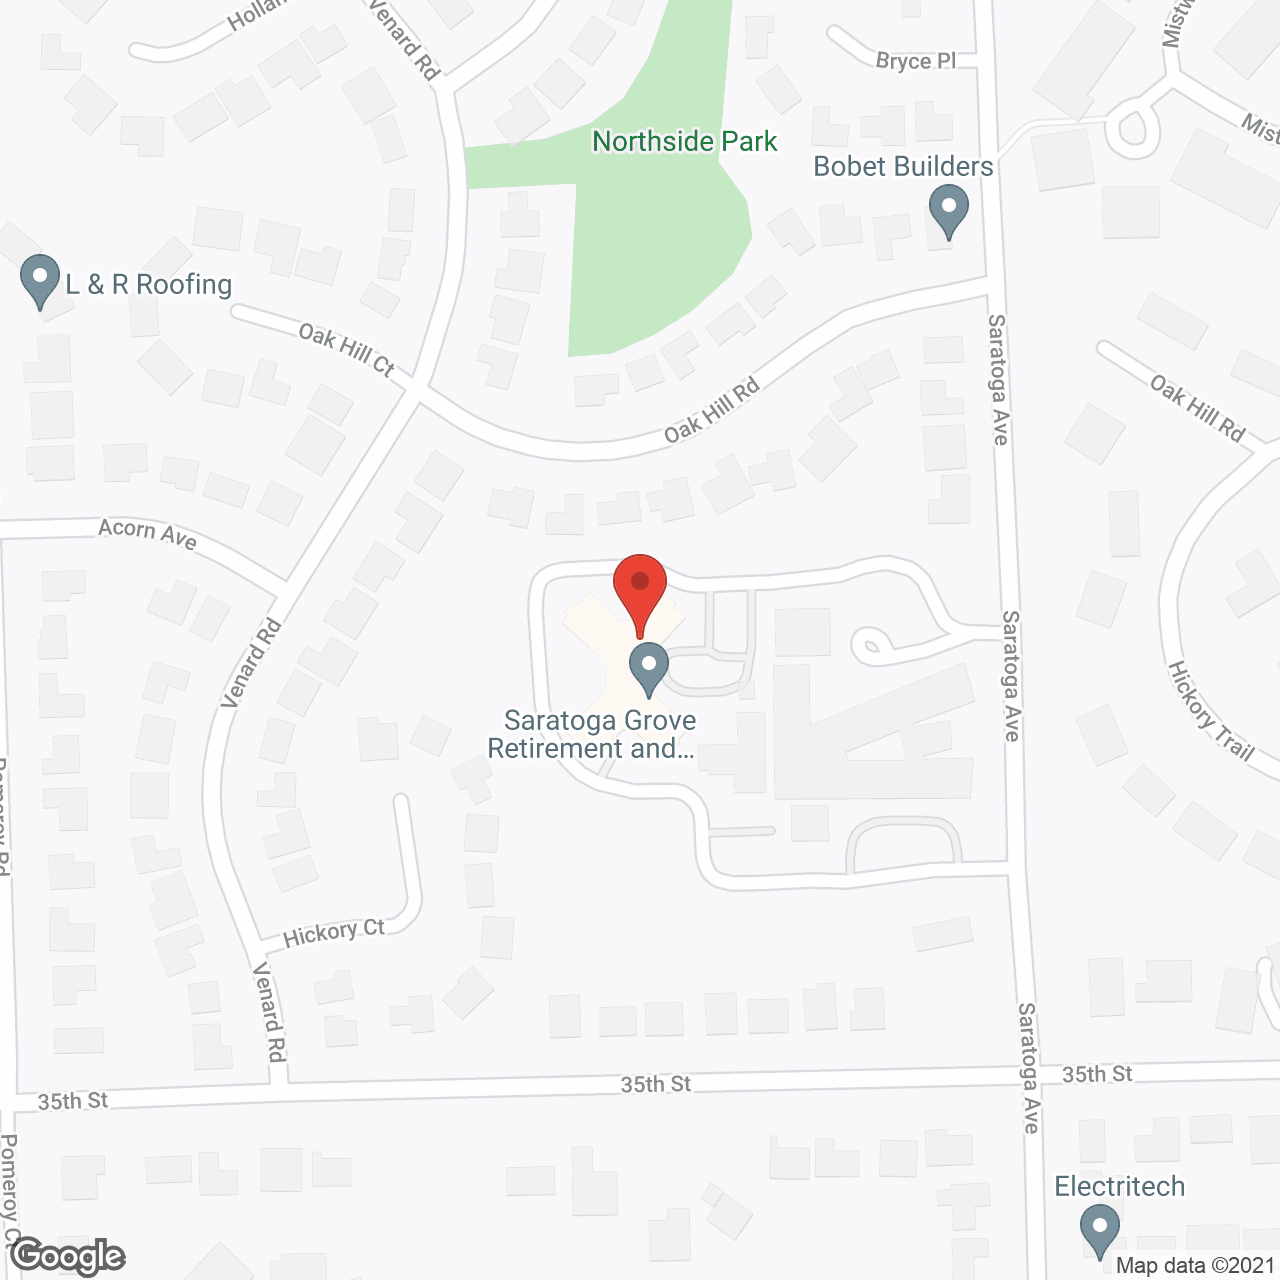 Saratoga Grove in google map